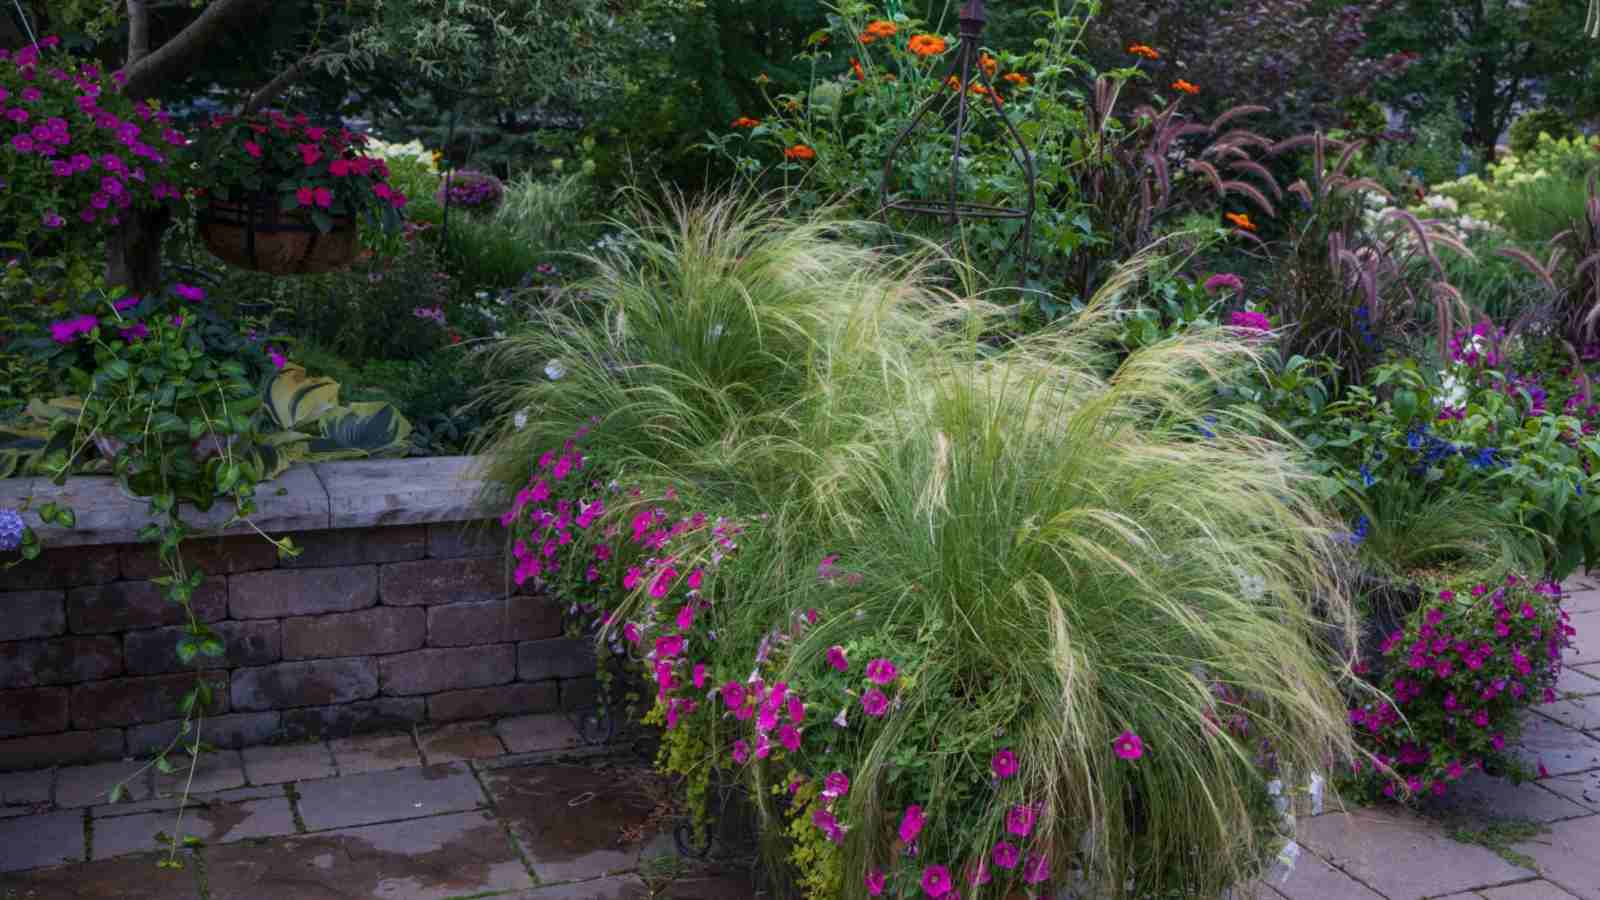 Fuchsia Calibrachoa 'Million Bells® Terra Cotta' and feather grass in pots